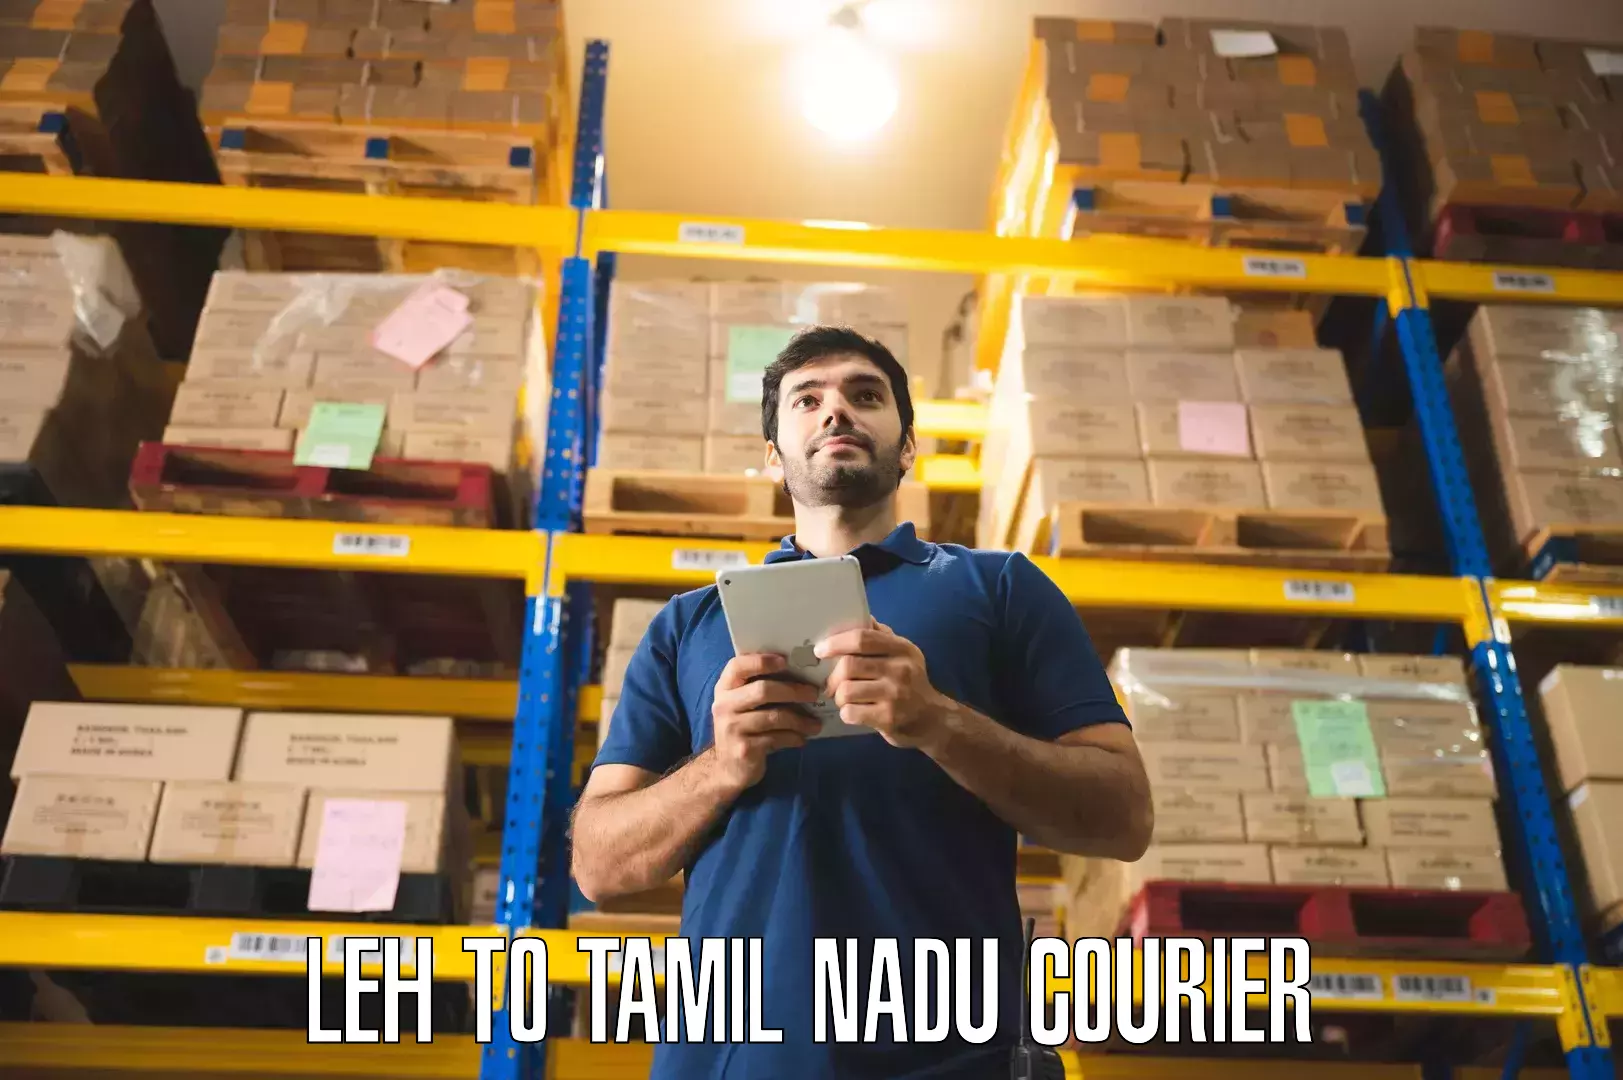 Professional moving company Leh to Tamil Nadu